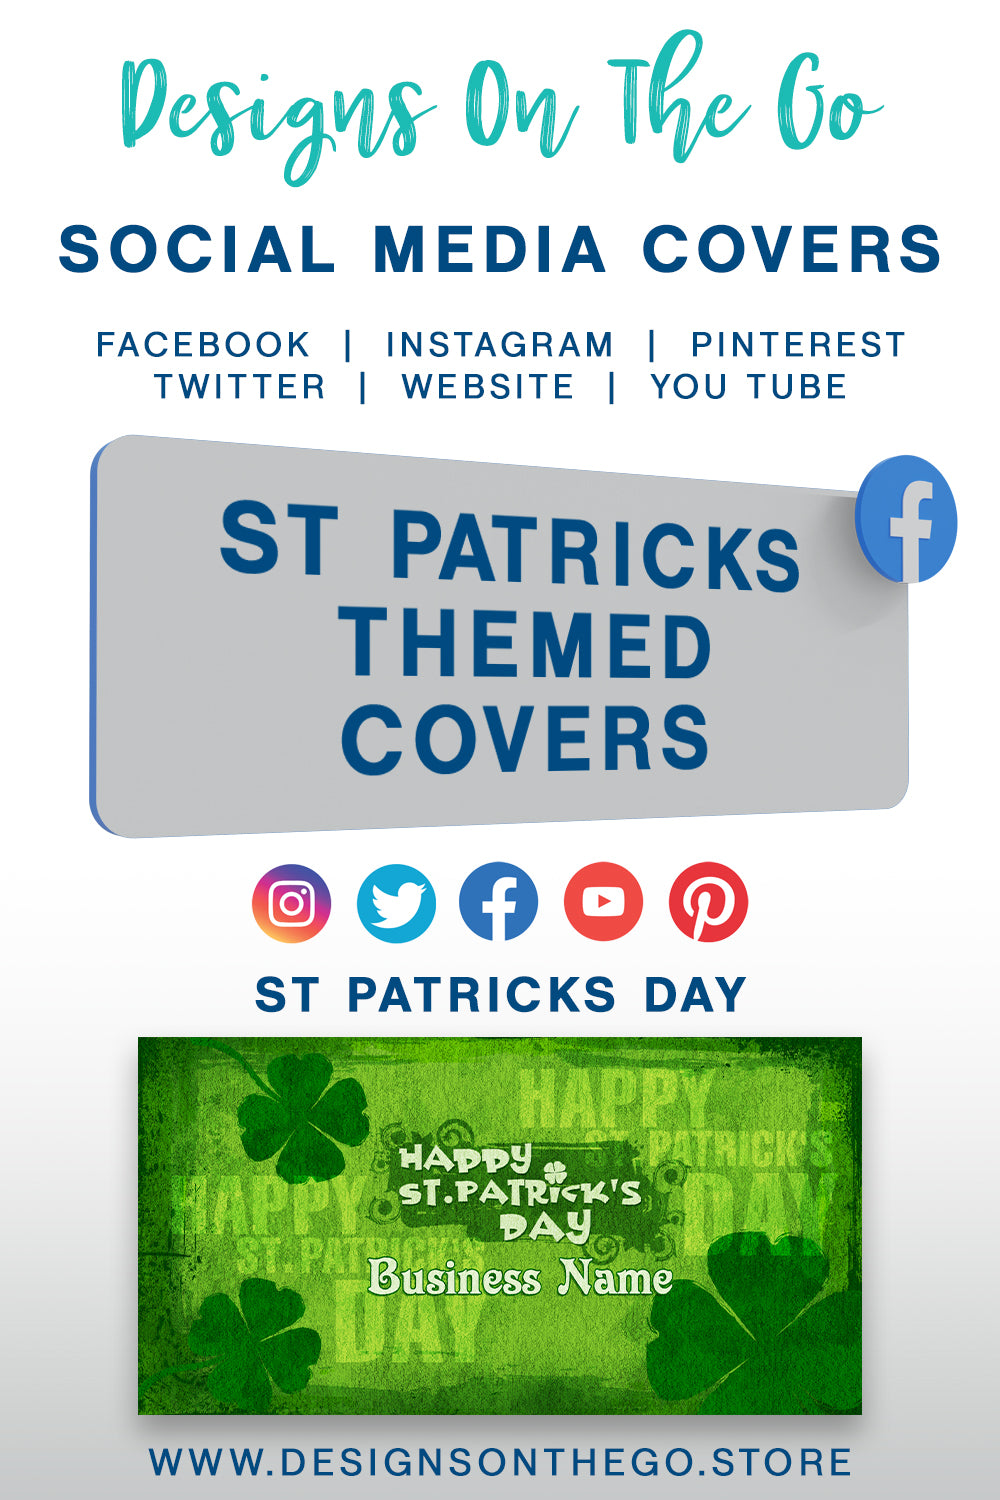 St Patricks Themed Social Media Covers